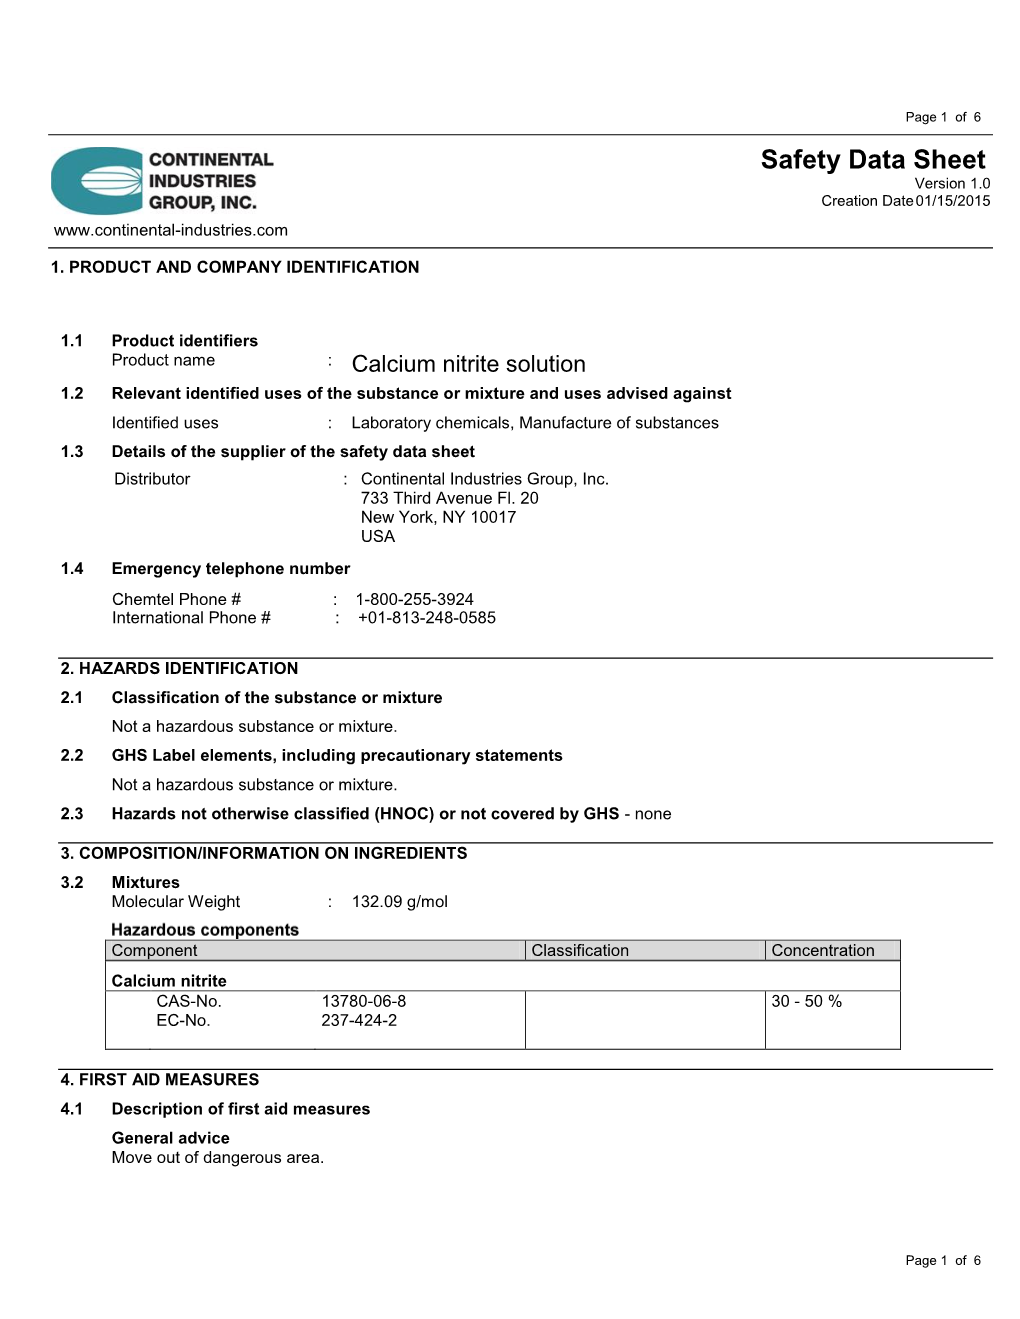 Safety Data Sheet Version 1.0 Creation Date 01/15/2015